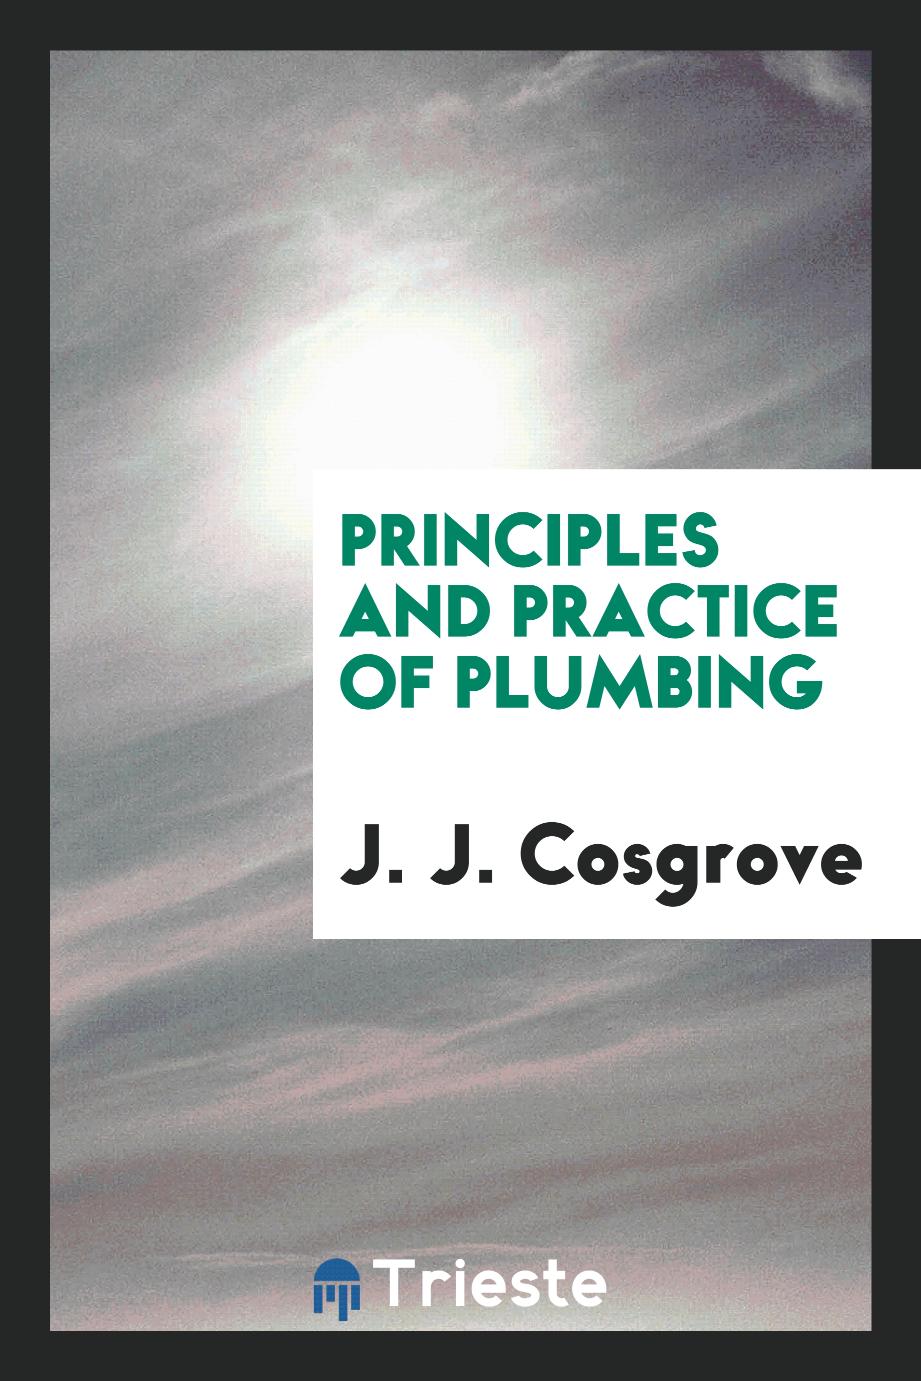 Principles and practice of plumbing